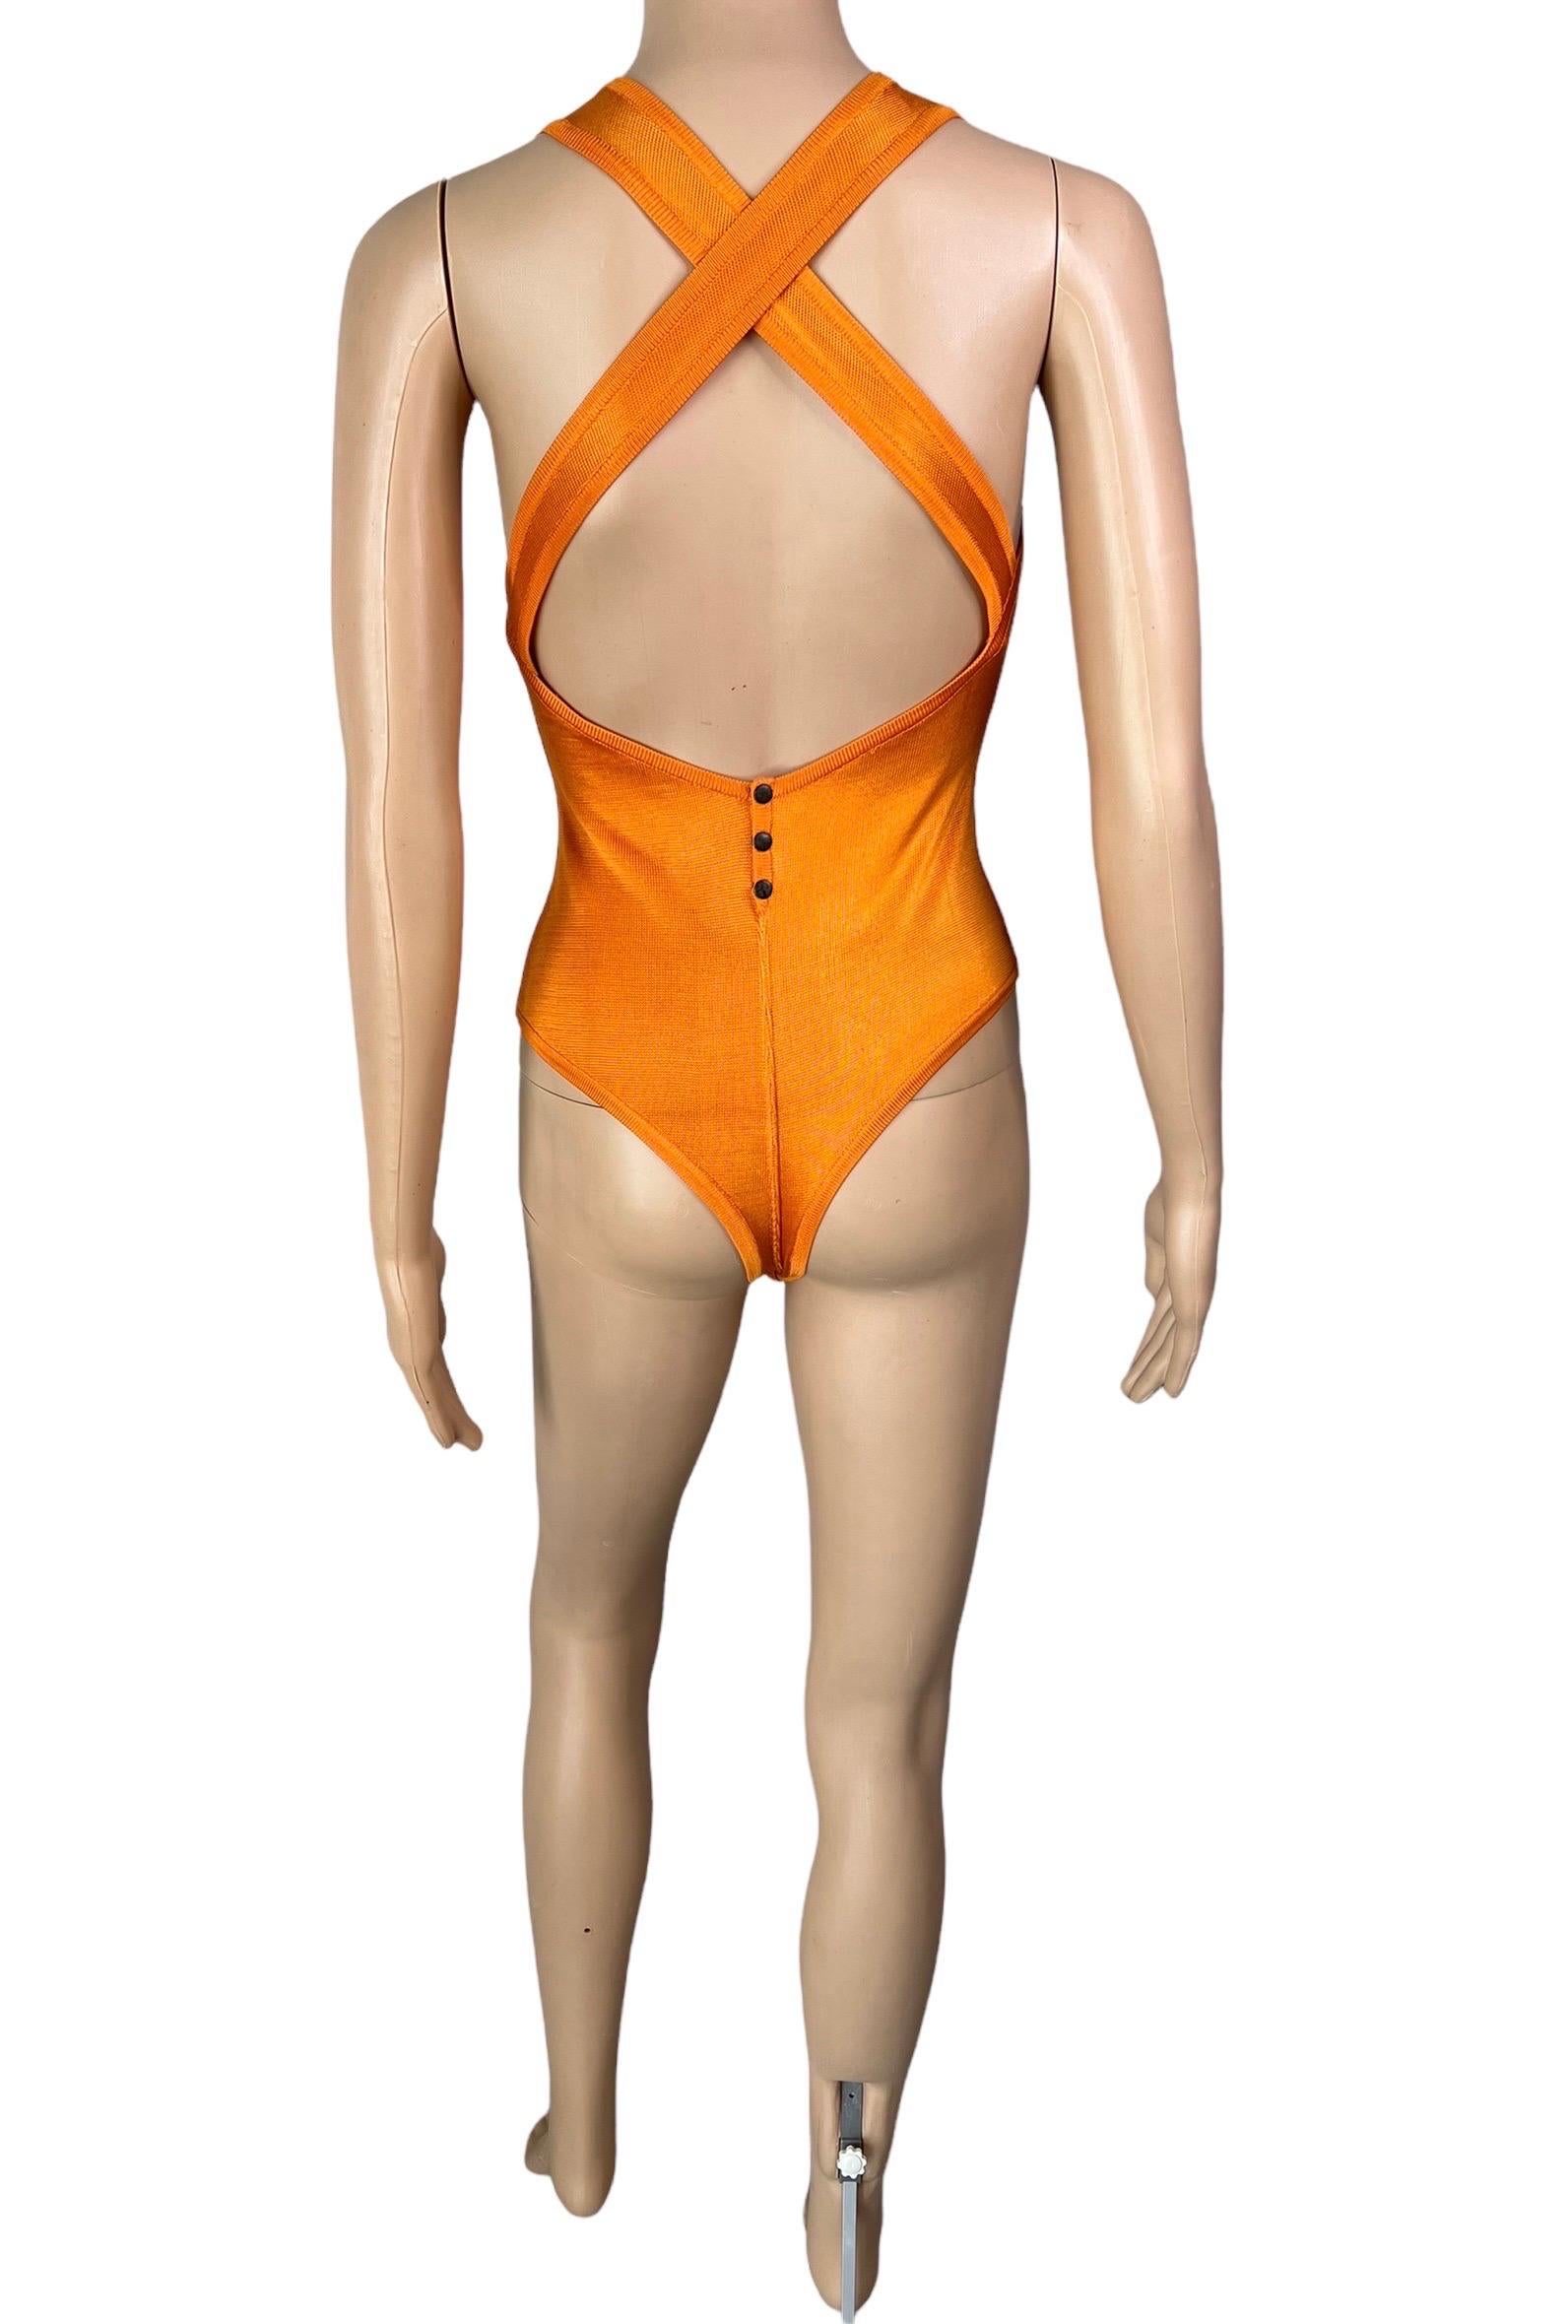 Azzedine Alaia Vintage S/S 1986 Open Back Orange Bodysuit Top For Sale 3